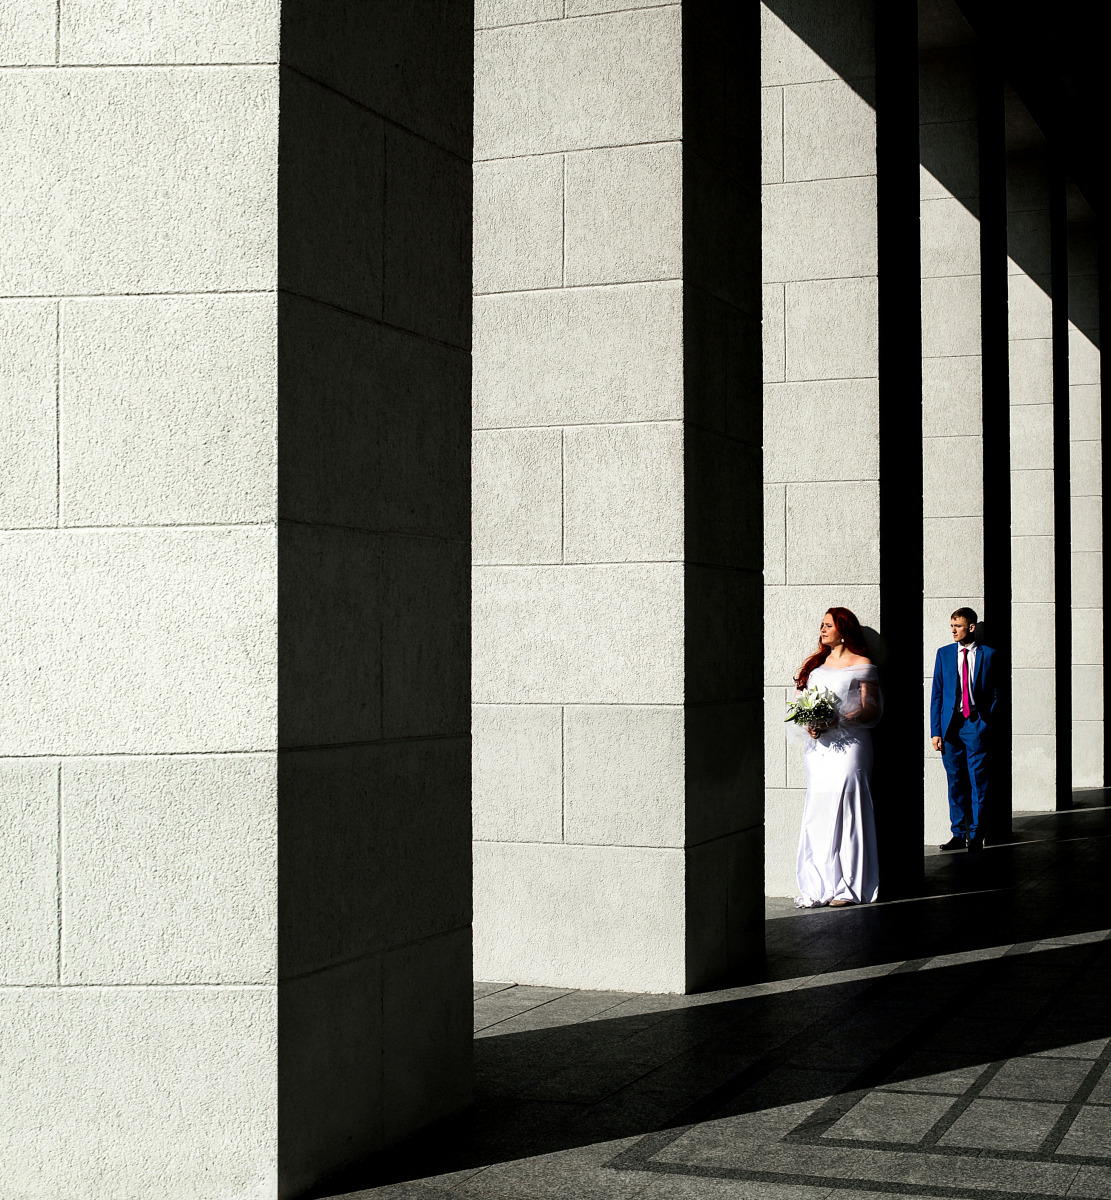 Свет и тень | Фотограф Павел Помолейко | foto.by фото.бай